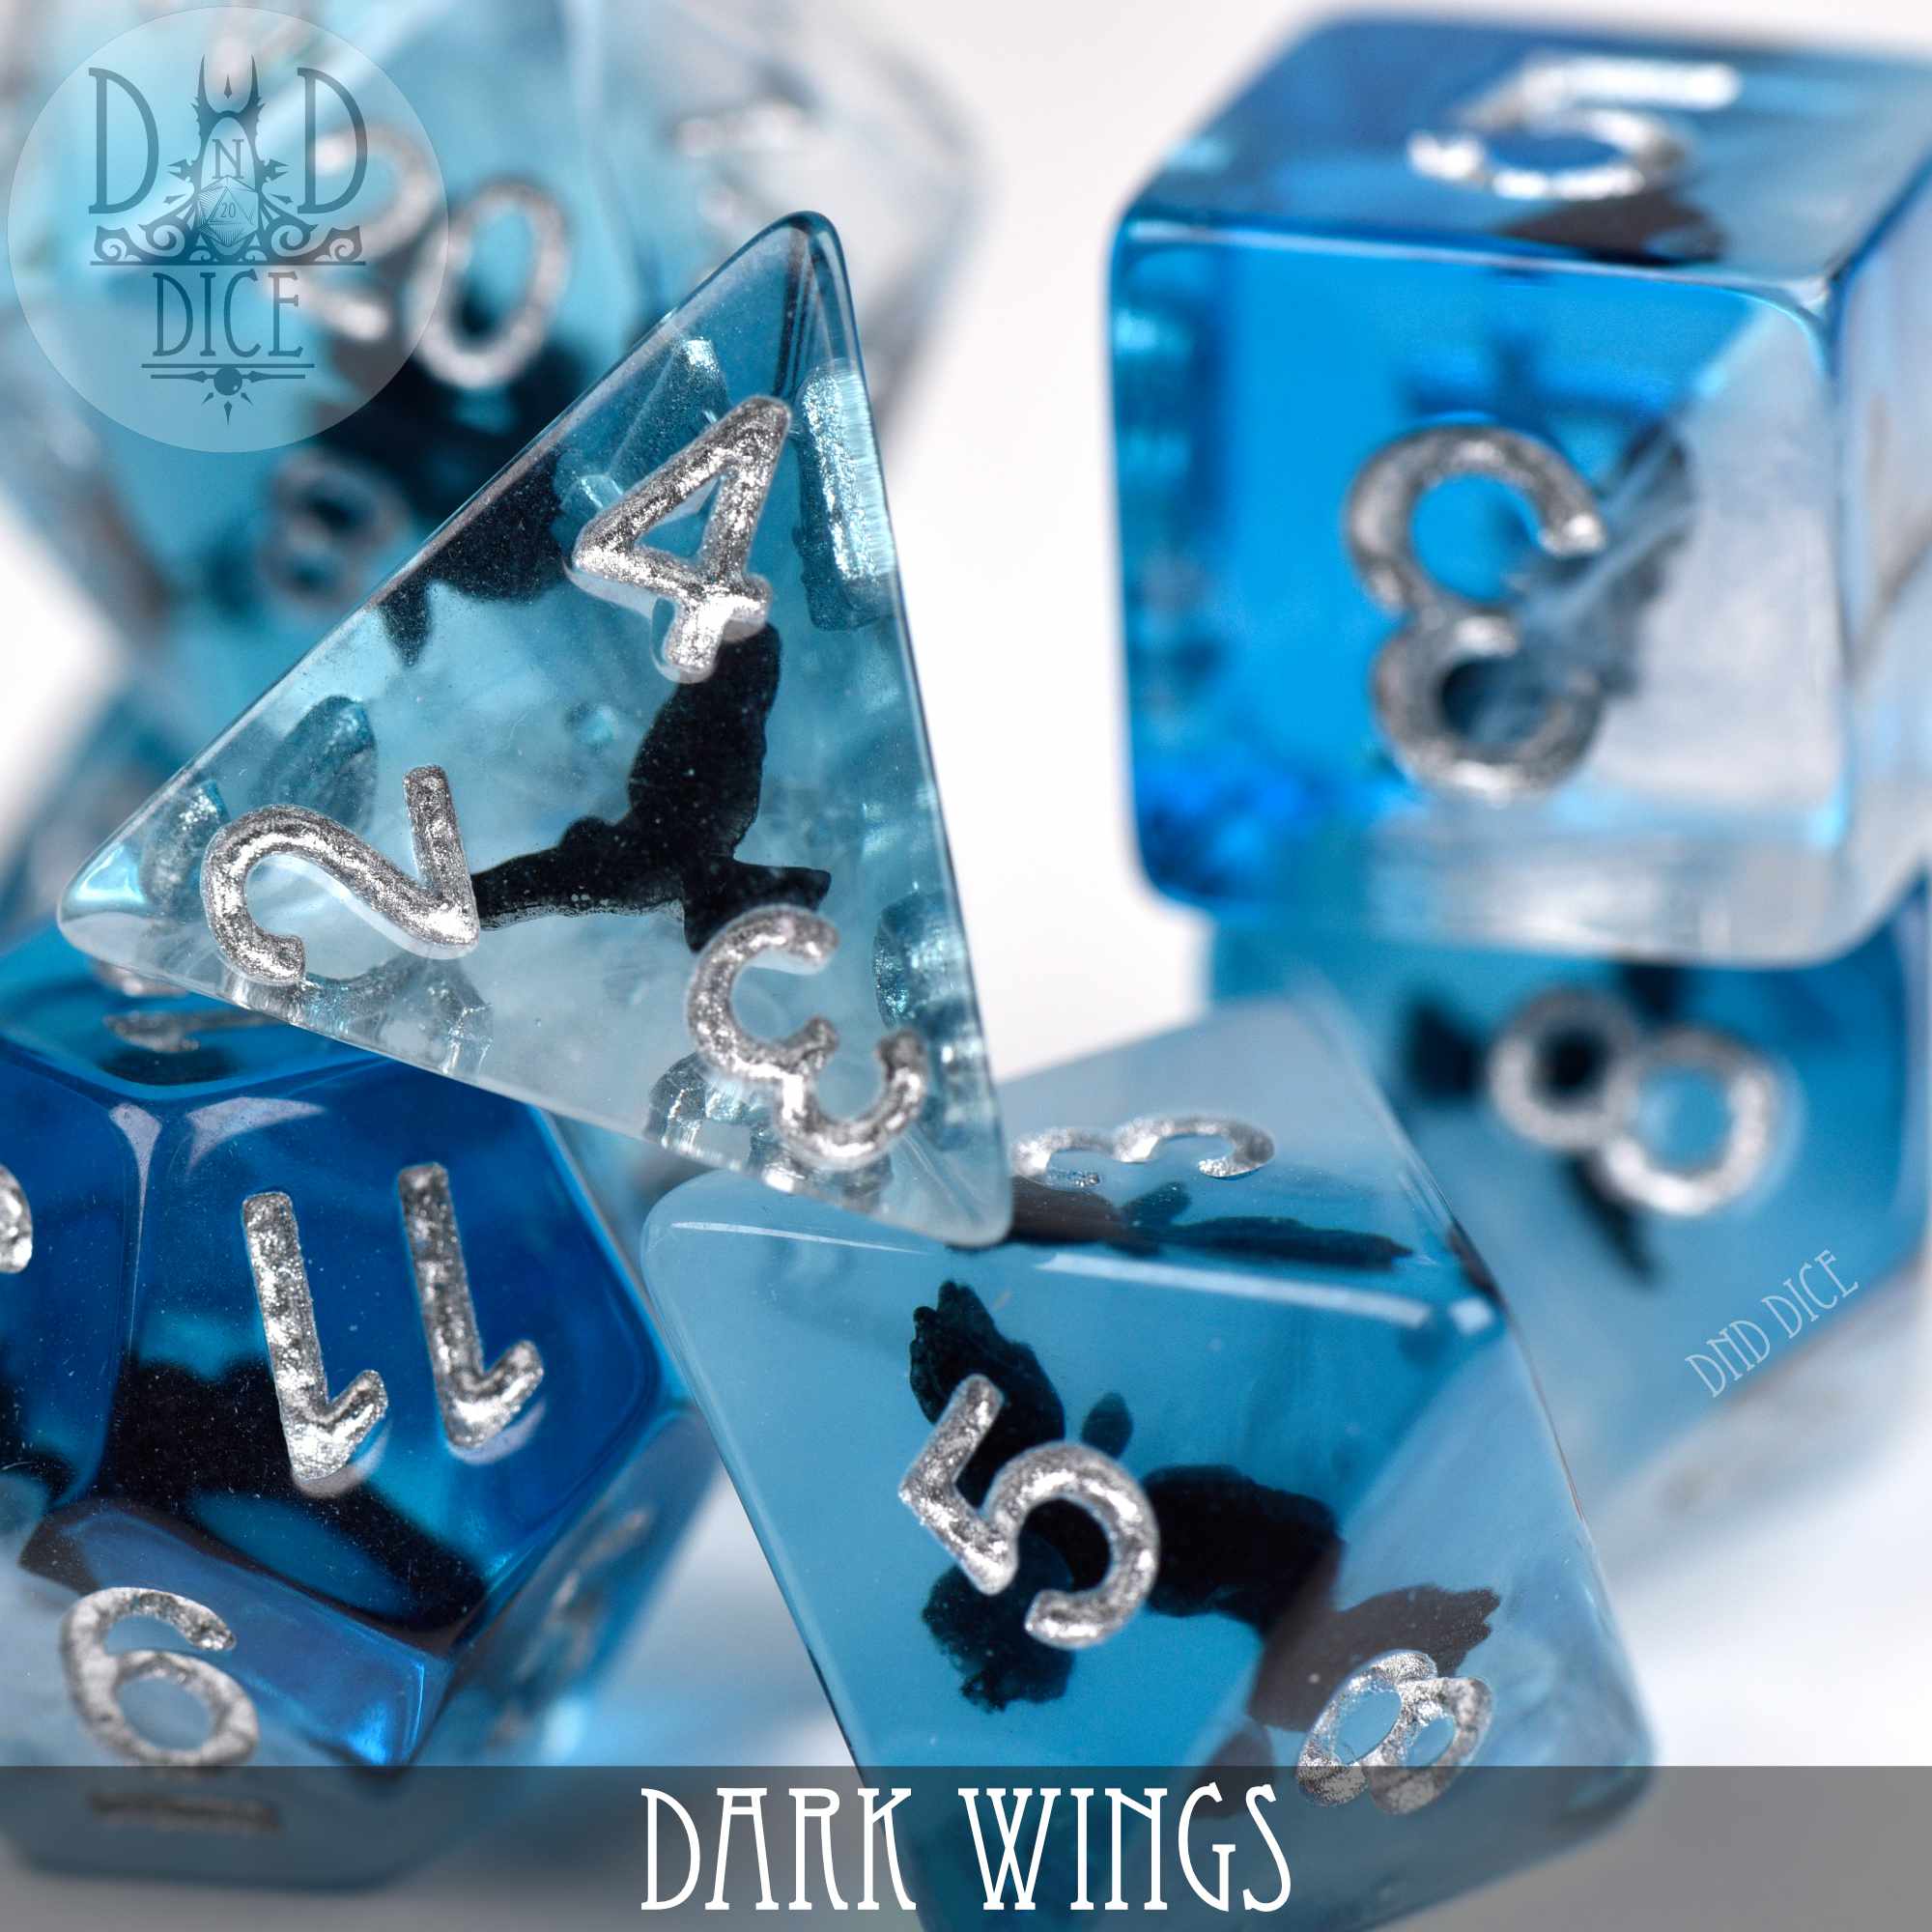 Dark Wings Dice Set